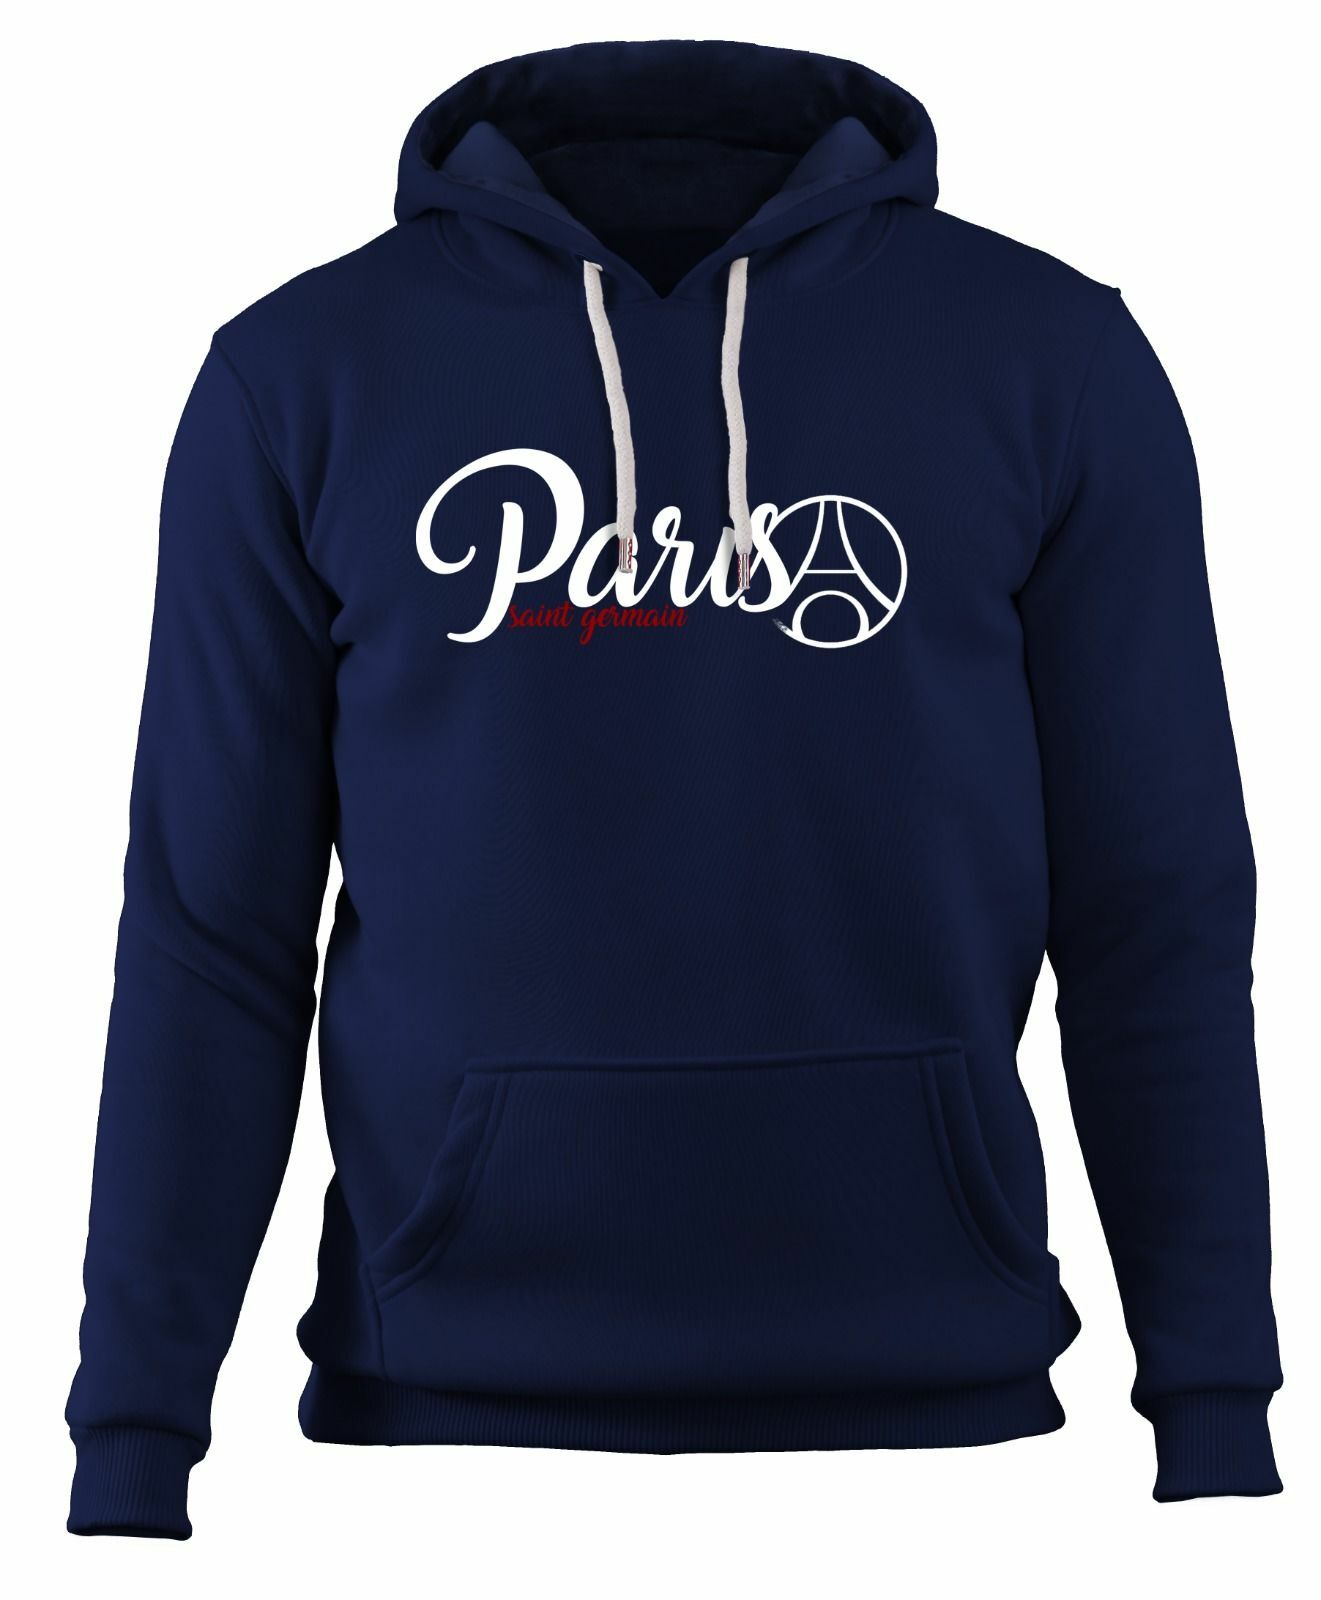 Paris Saint Germain - PSG - Paris - Sweatshirt